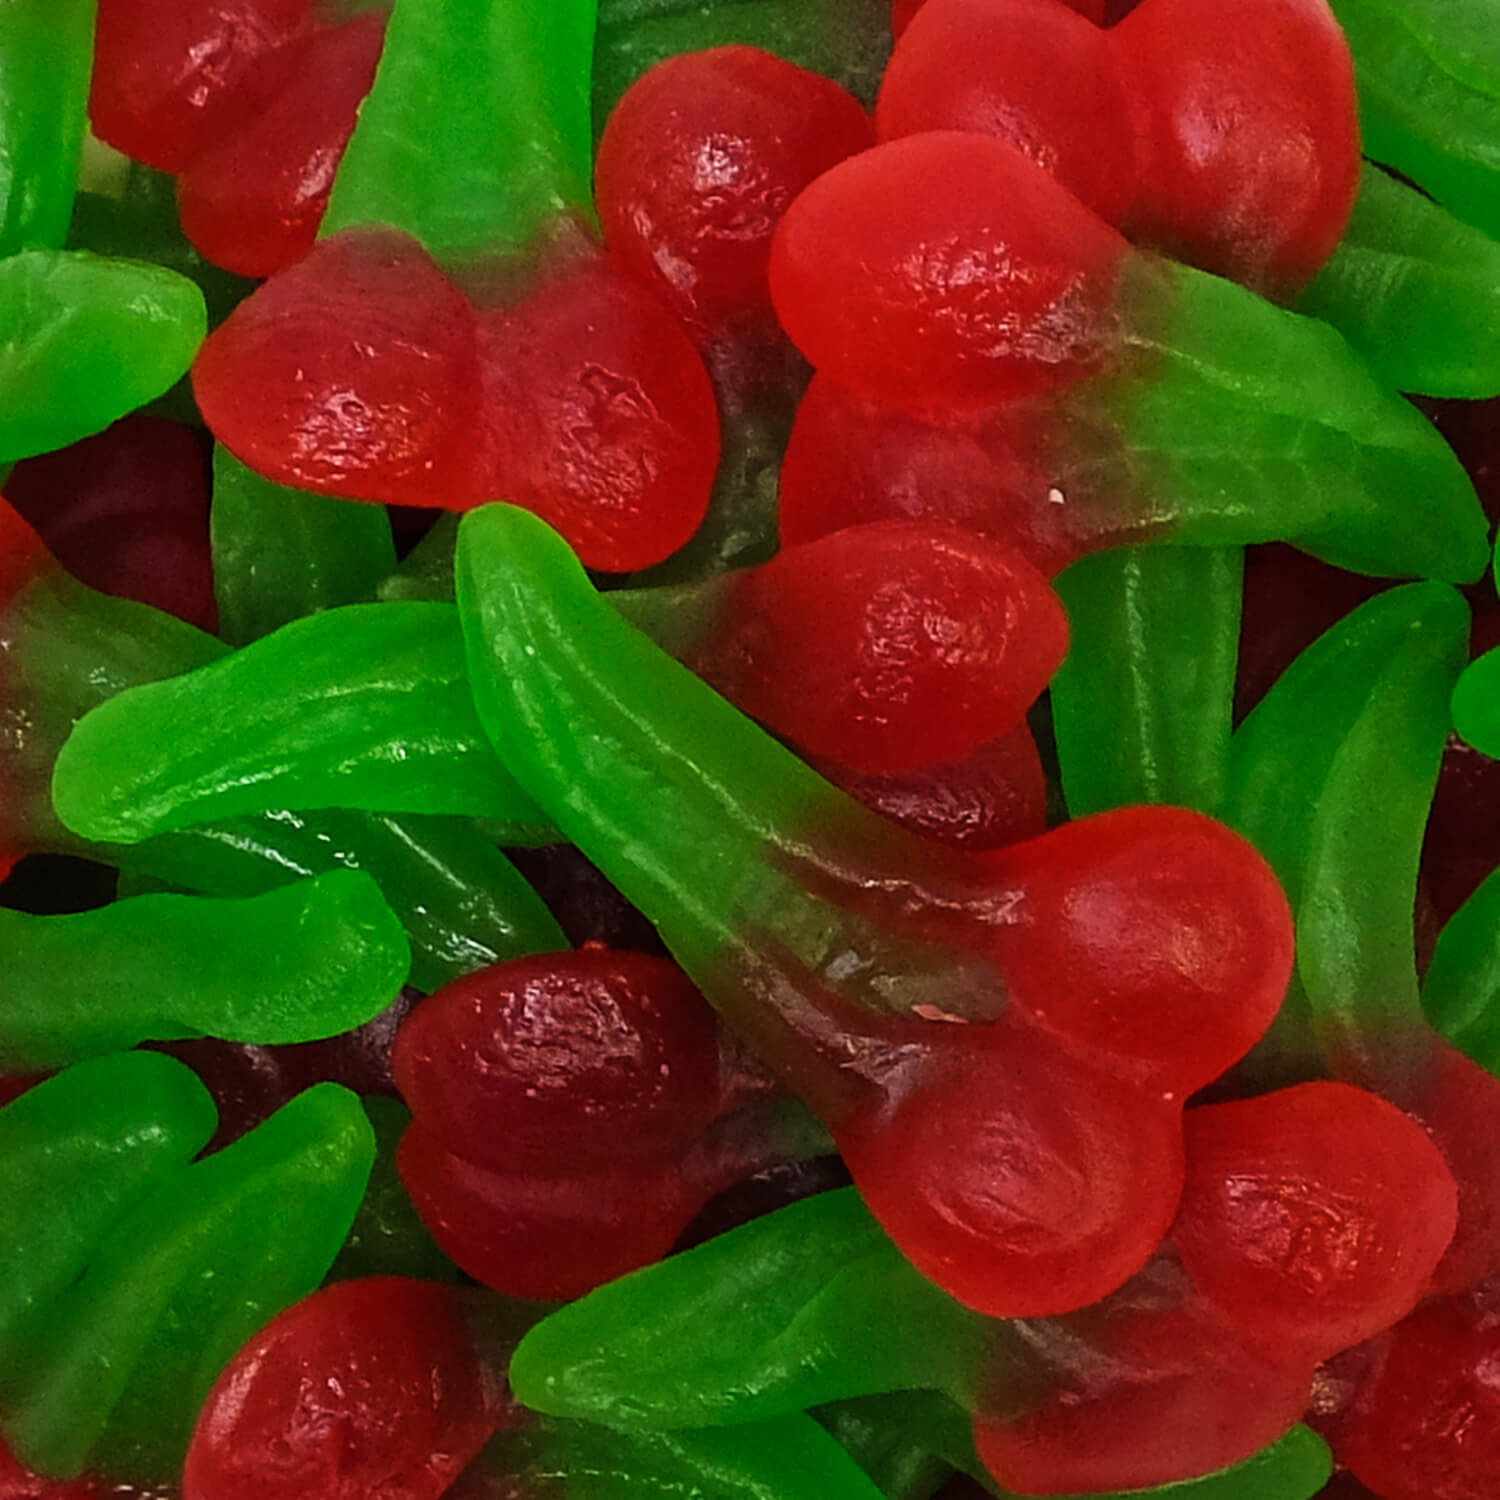 Jelly cherries